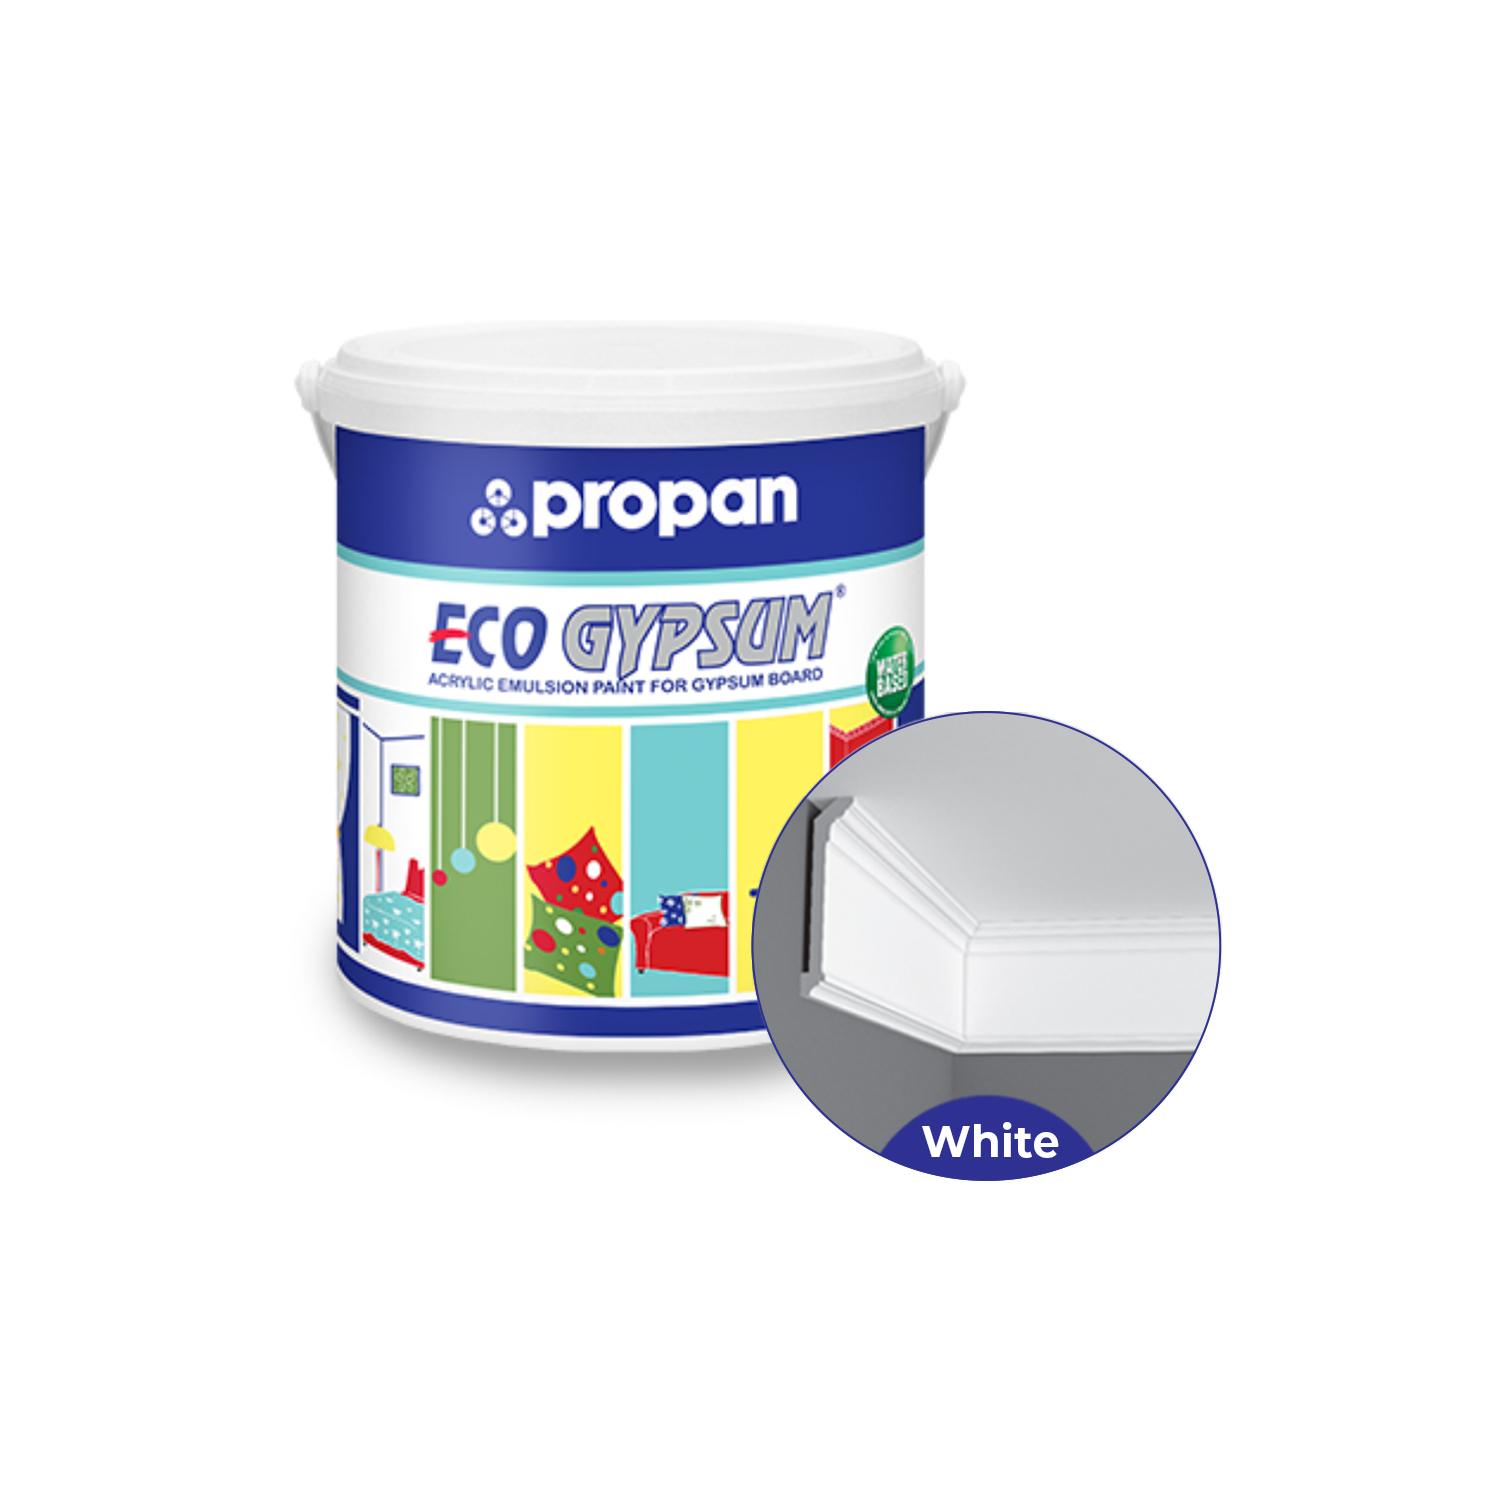 Propan Eco Gypsum EE-4050 White 9101 5kg - Cat Akrilik Interior